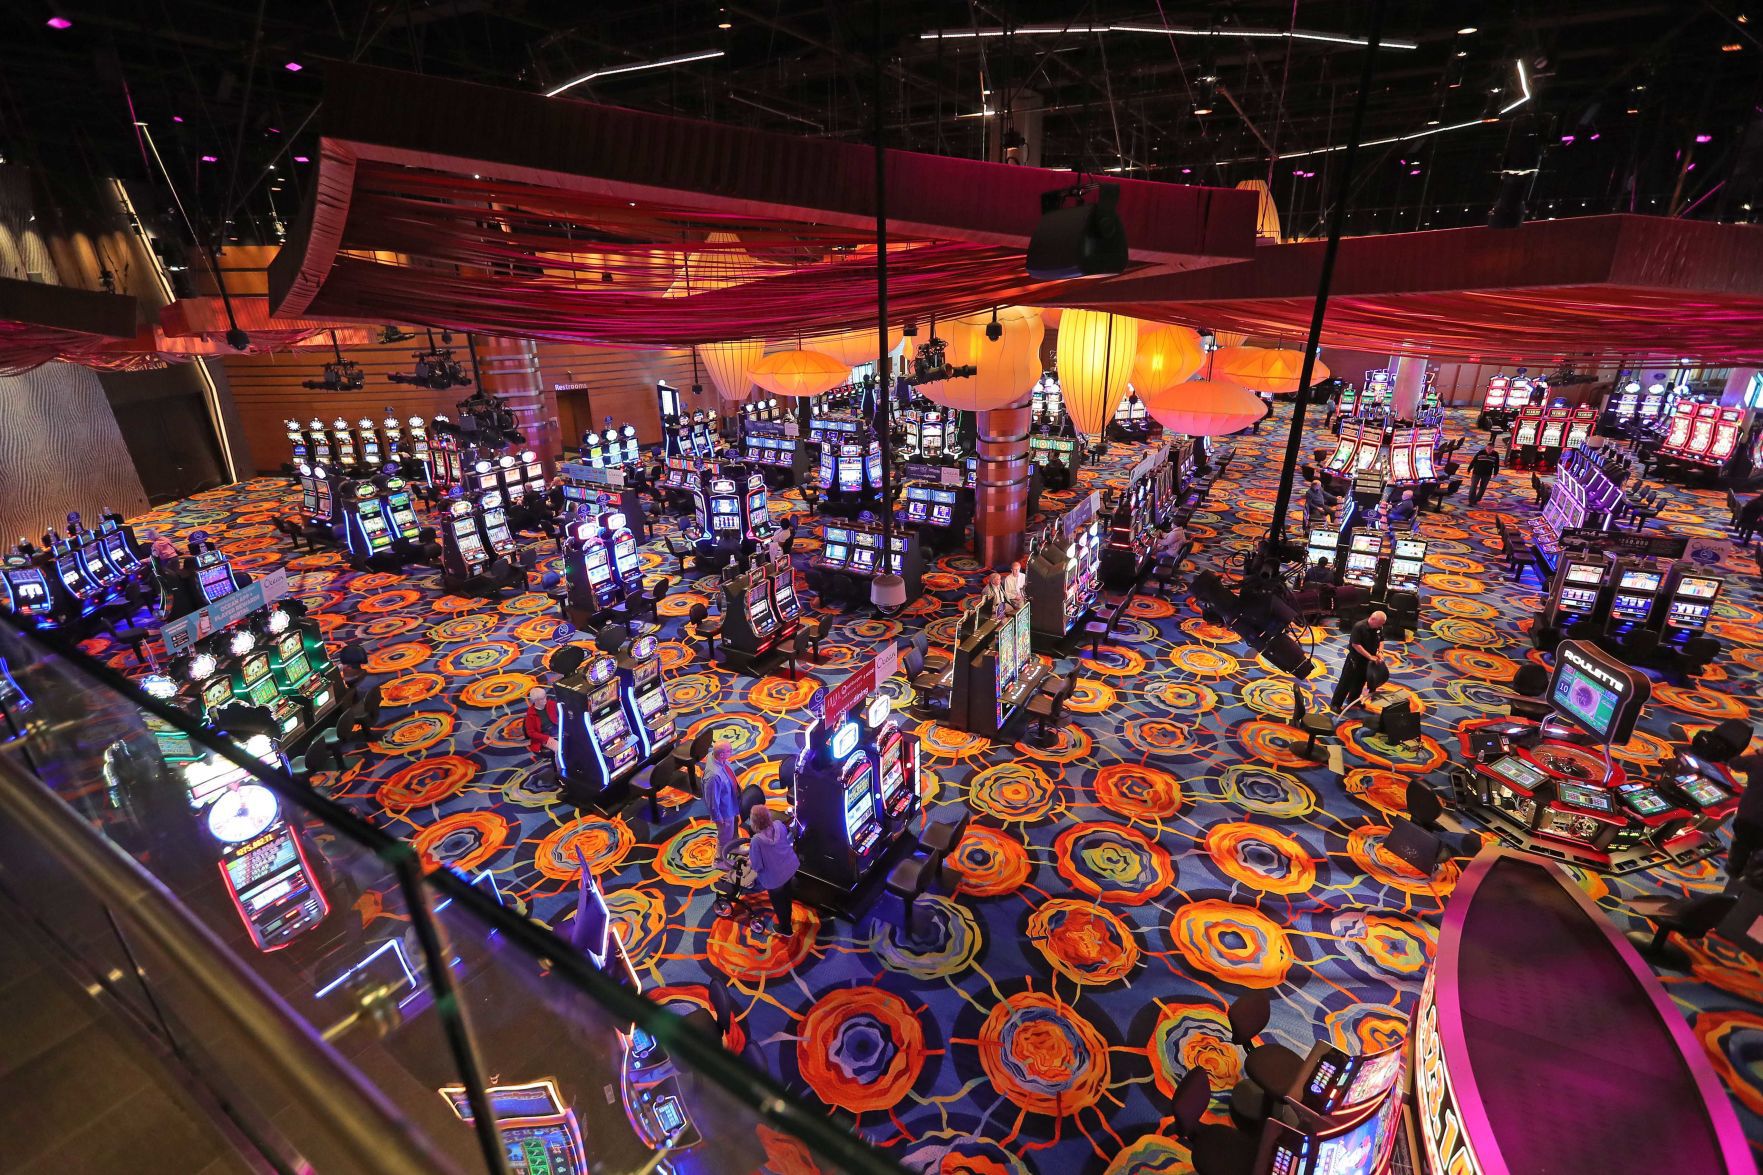 ocean resort online casino sign up bonus